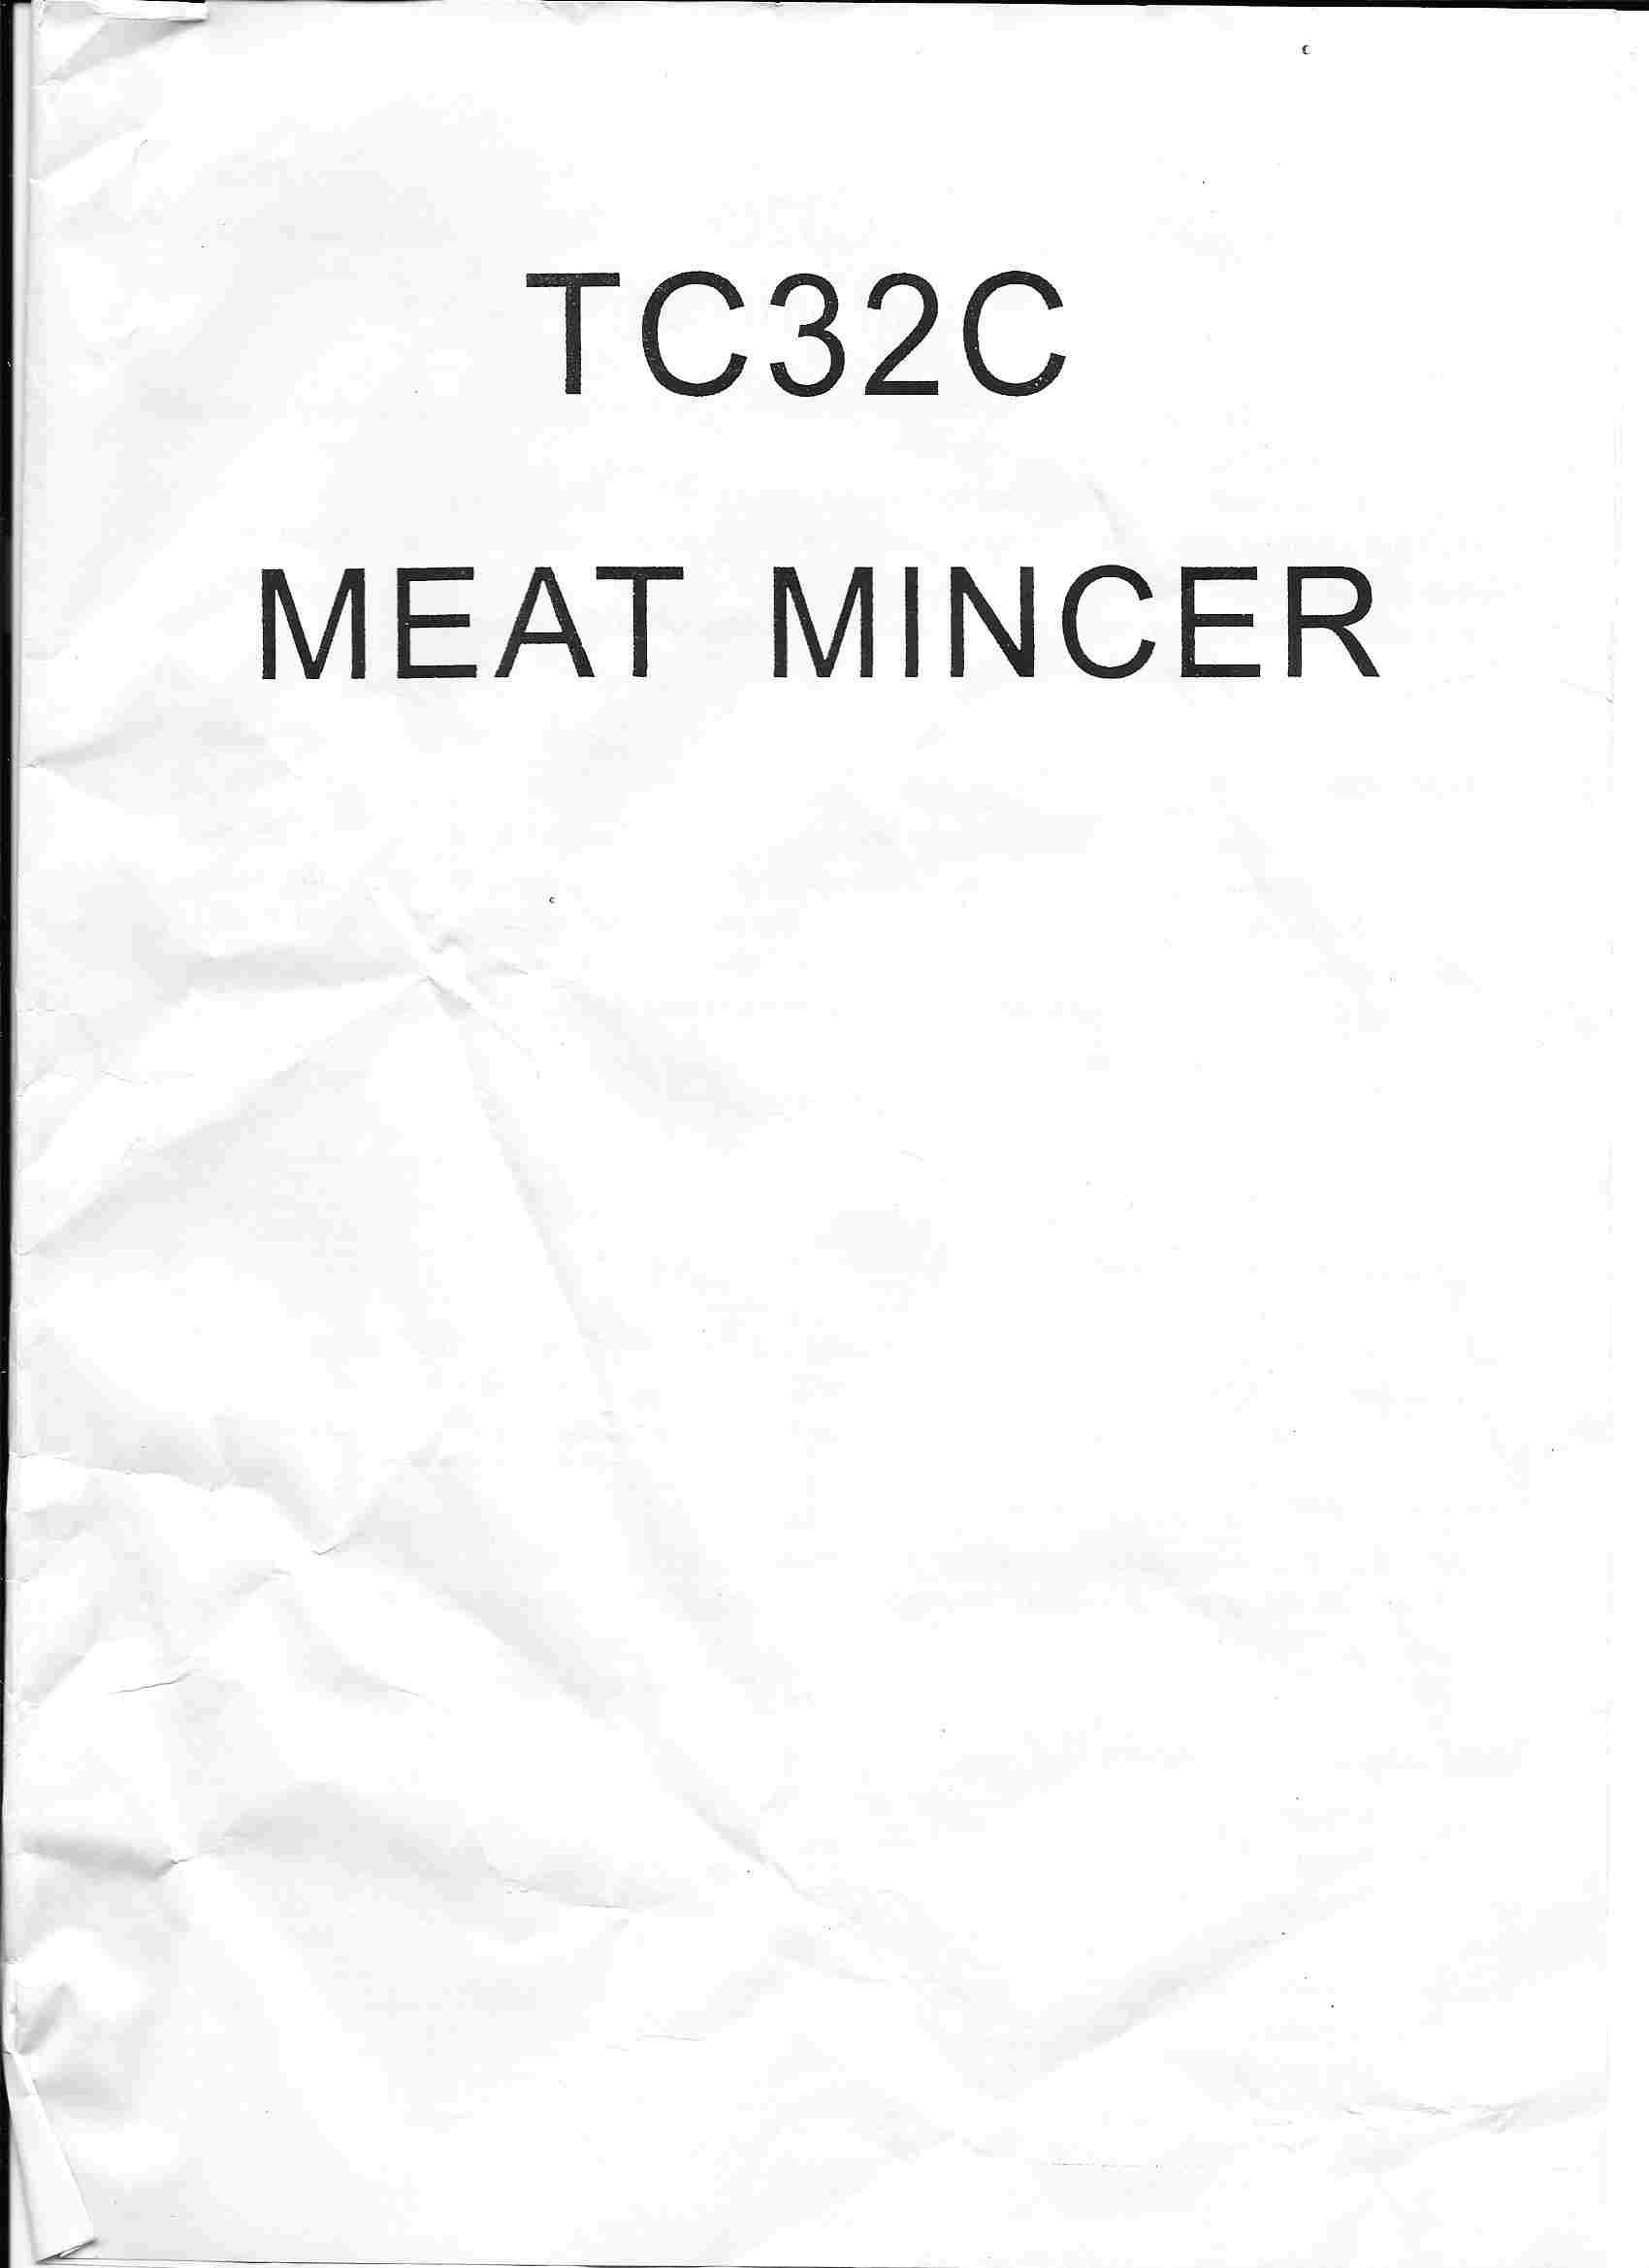 Proprocessor #32 Meat Grinder Manual 